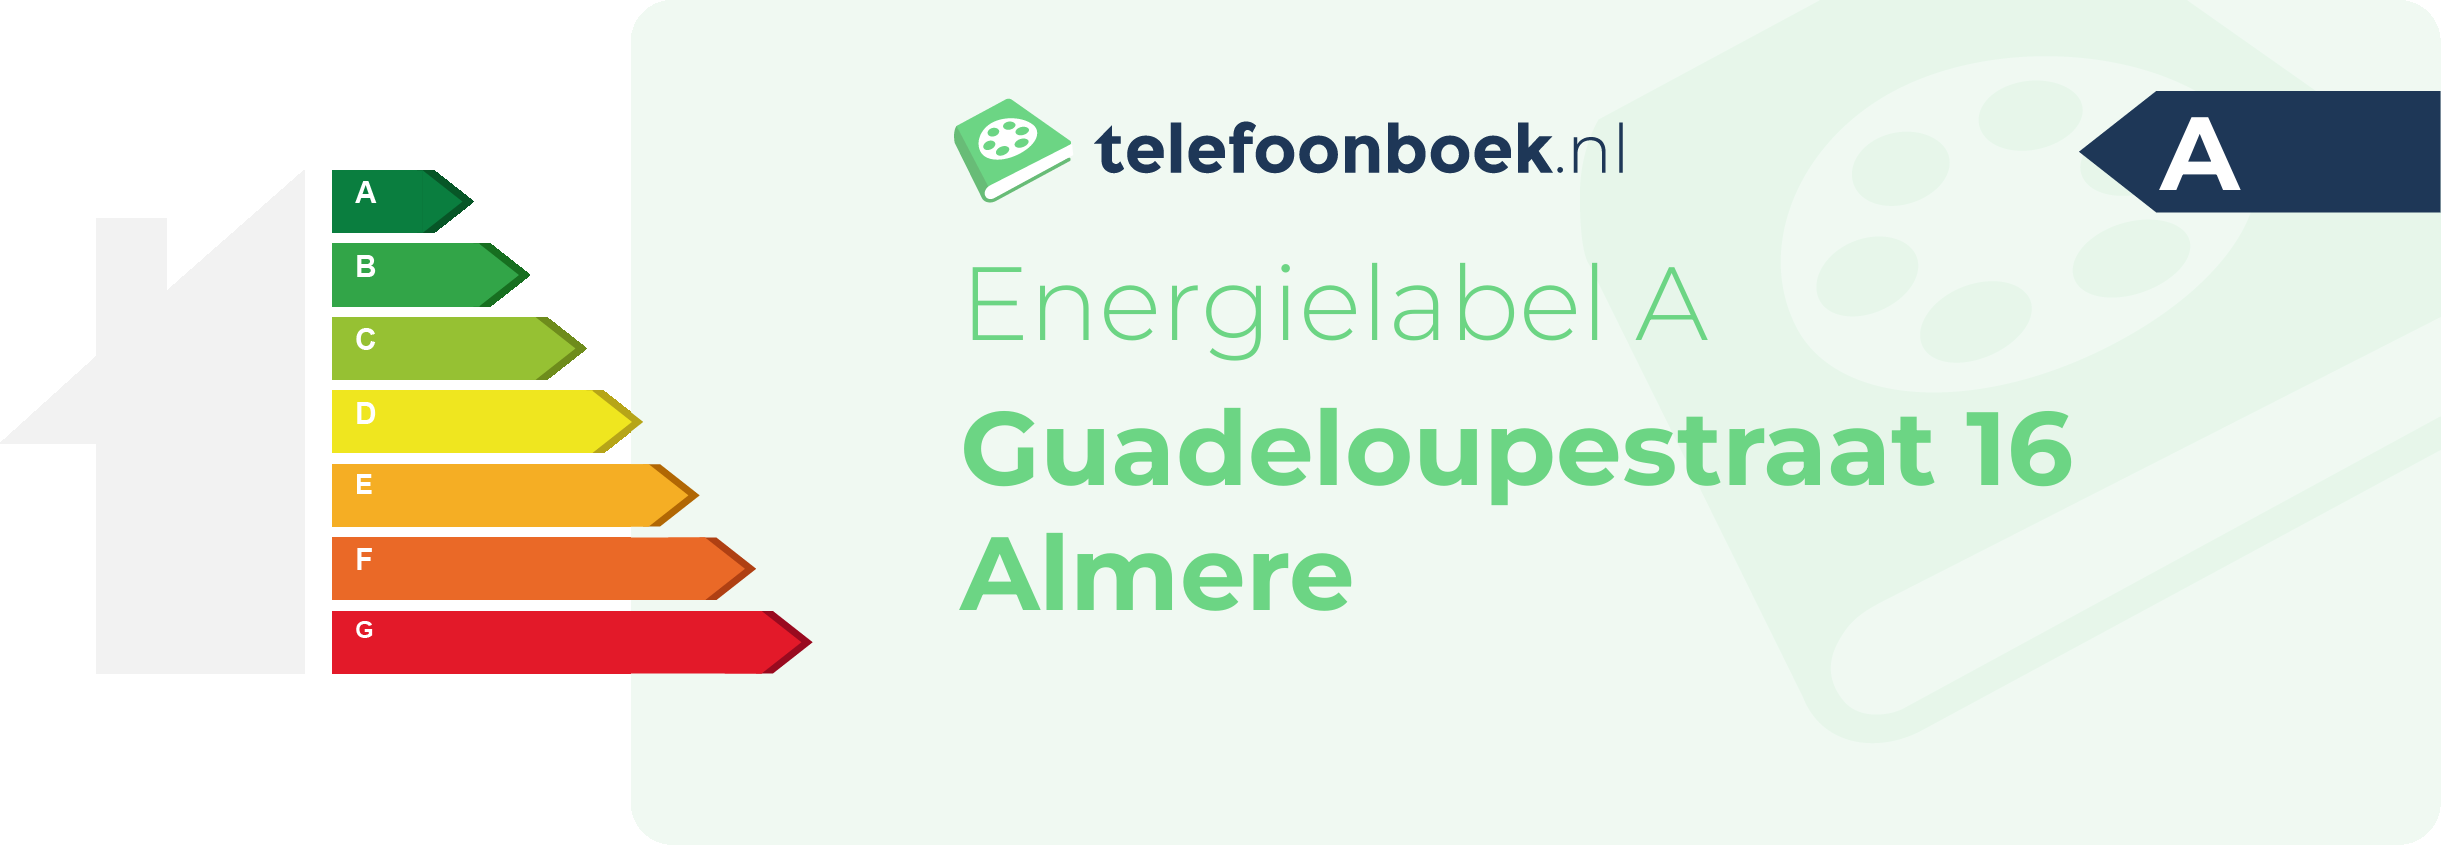 Energielabel Guadeloupestraat 16 Almere